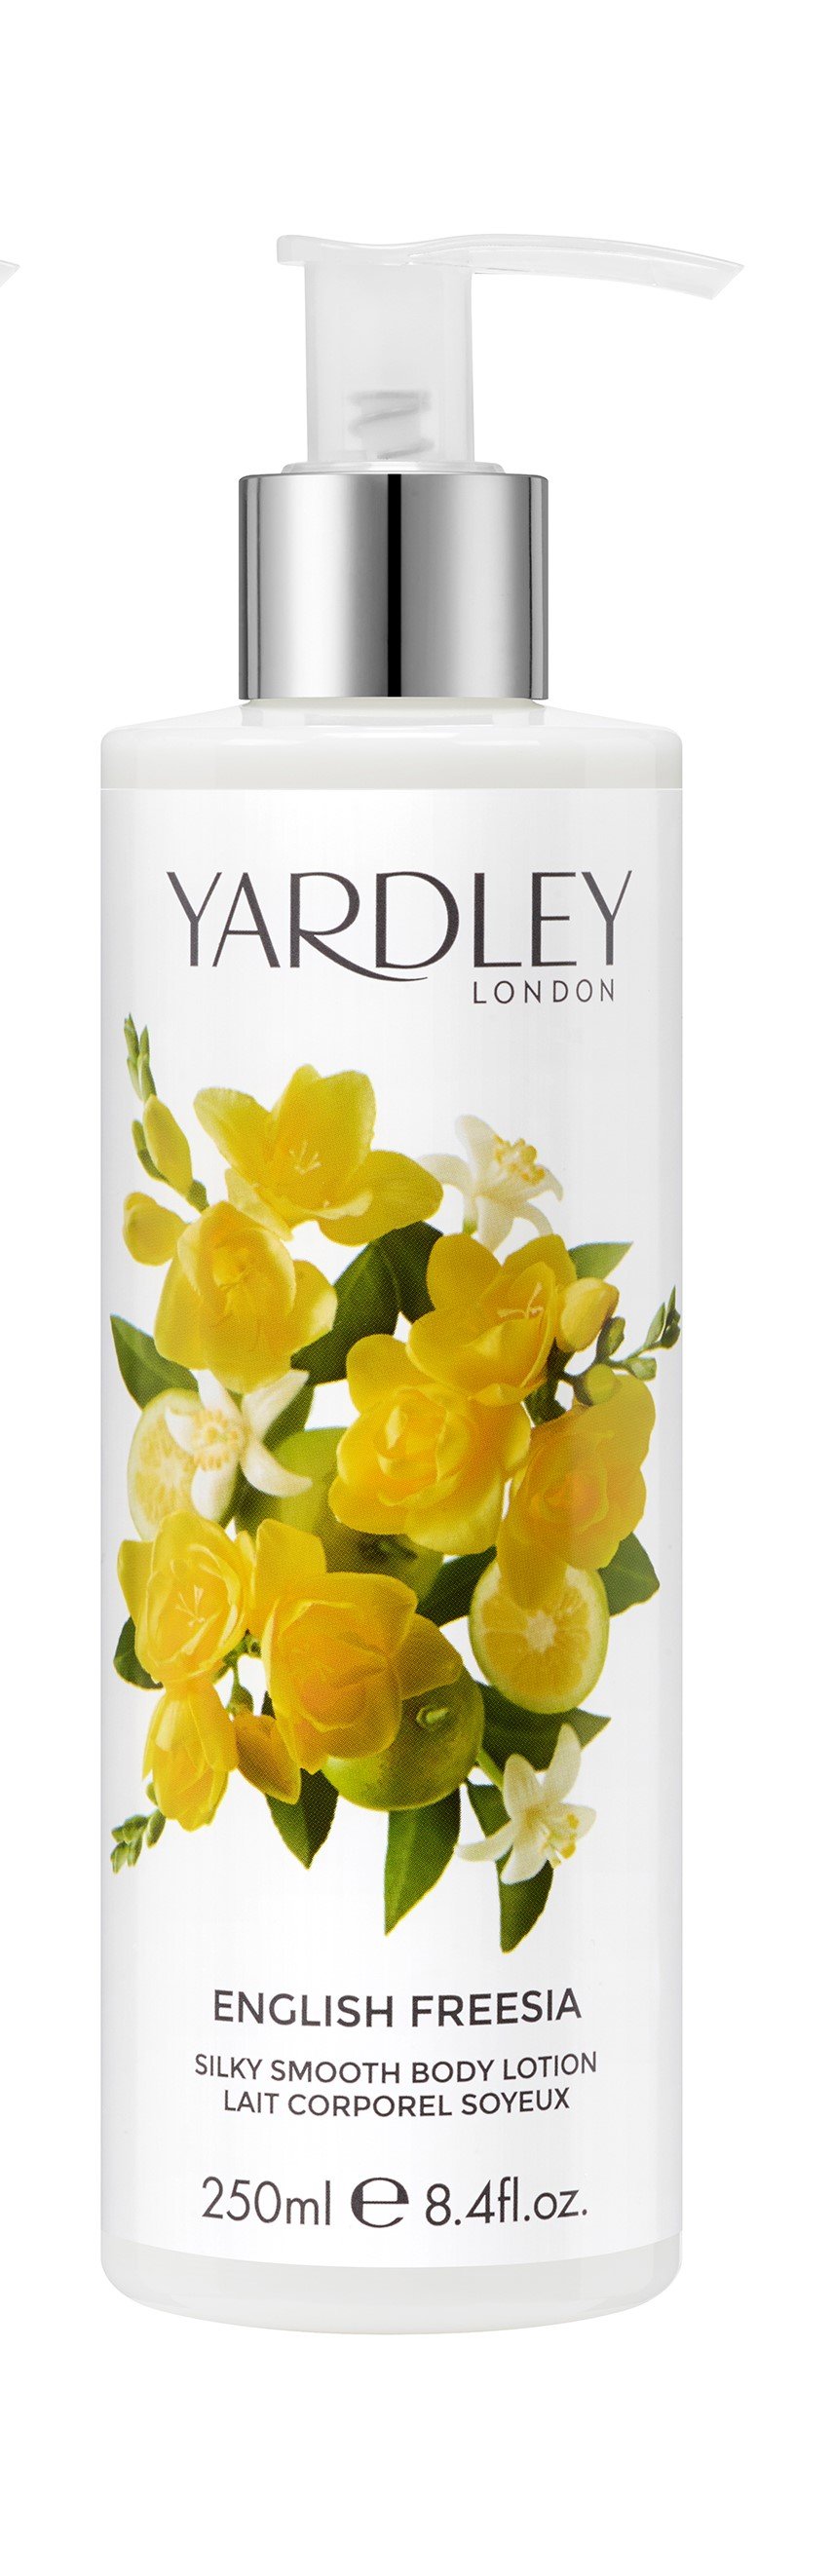 Yardley English Freesia 250ml Body Lotion